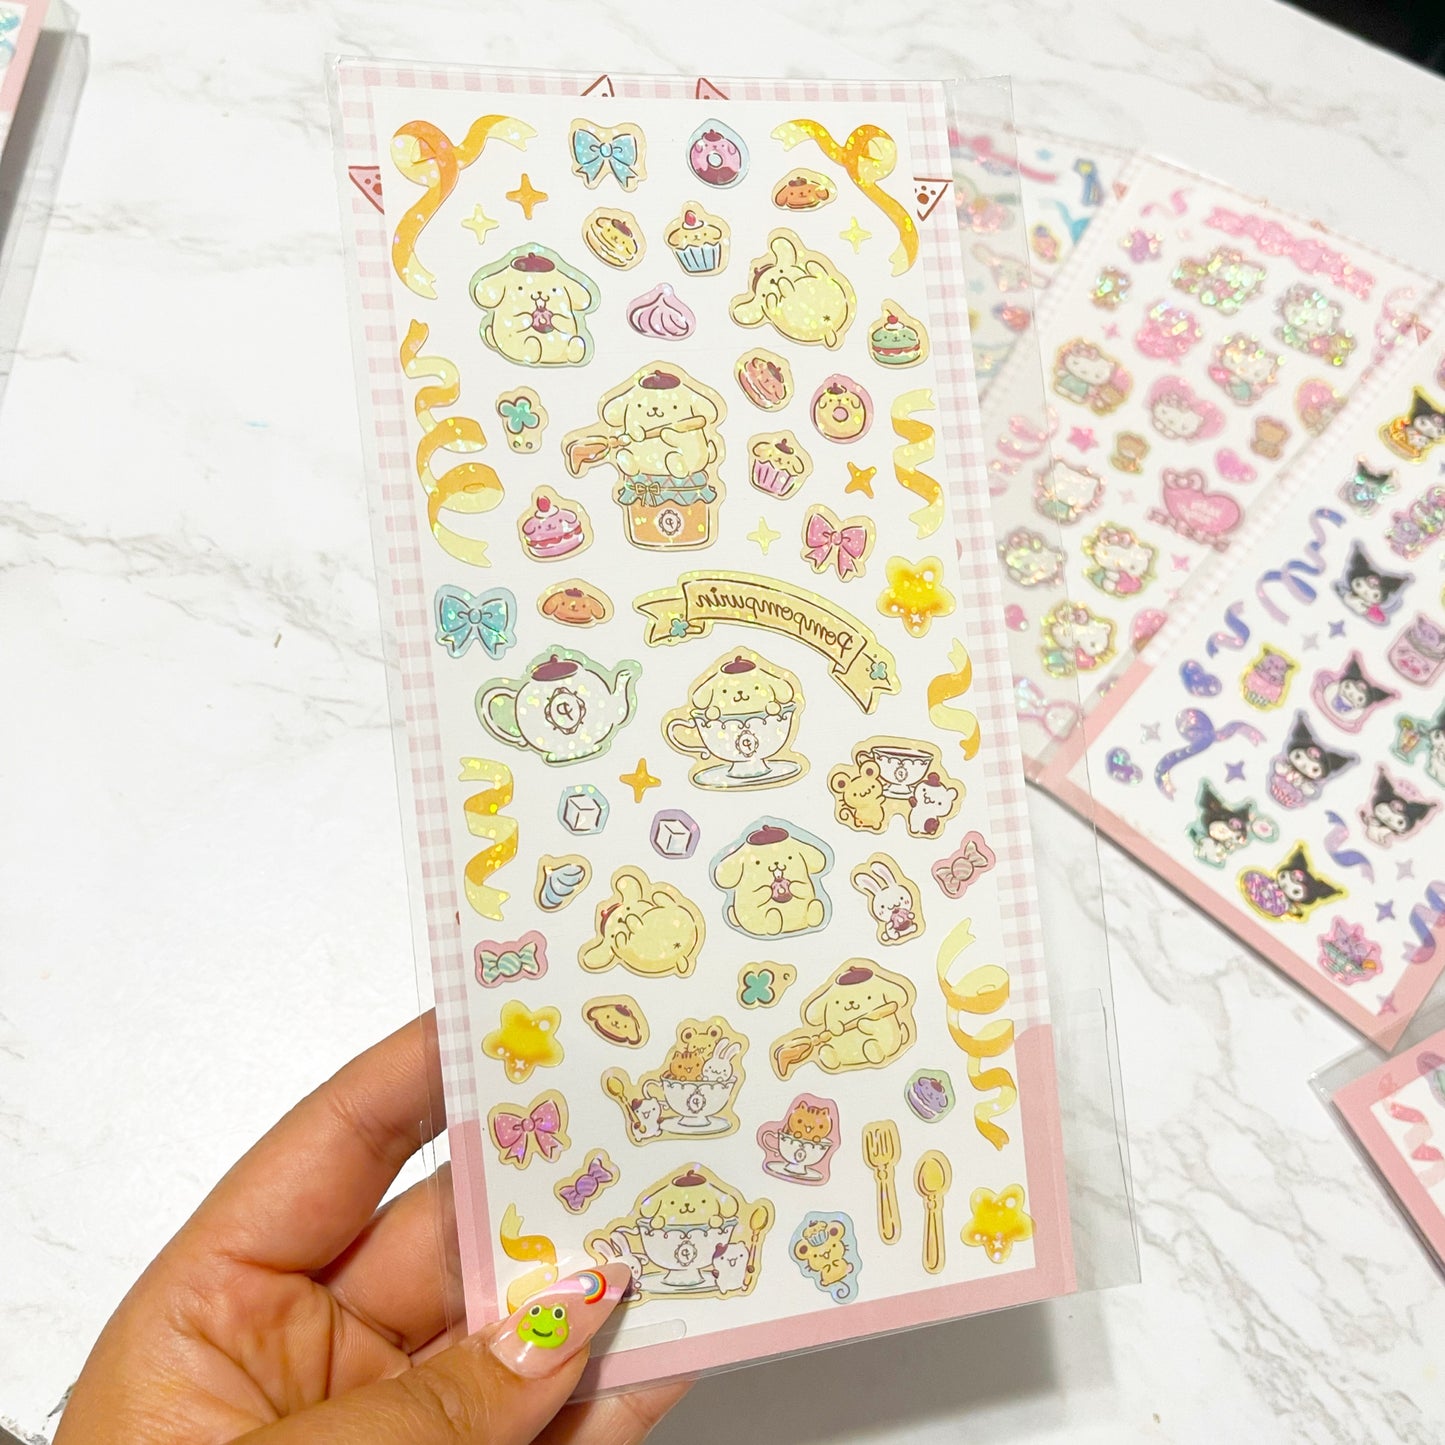 Sanrio sticker sheets